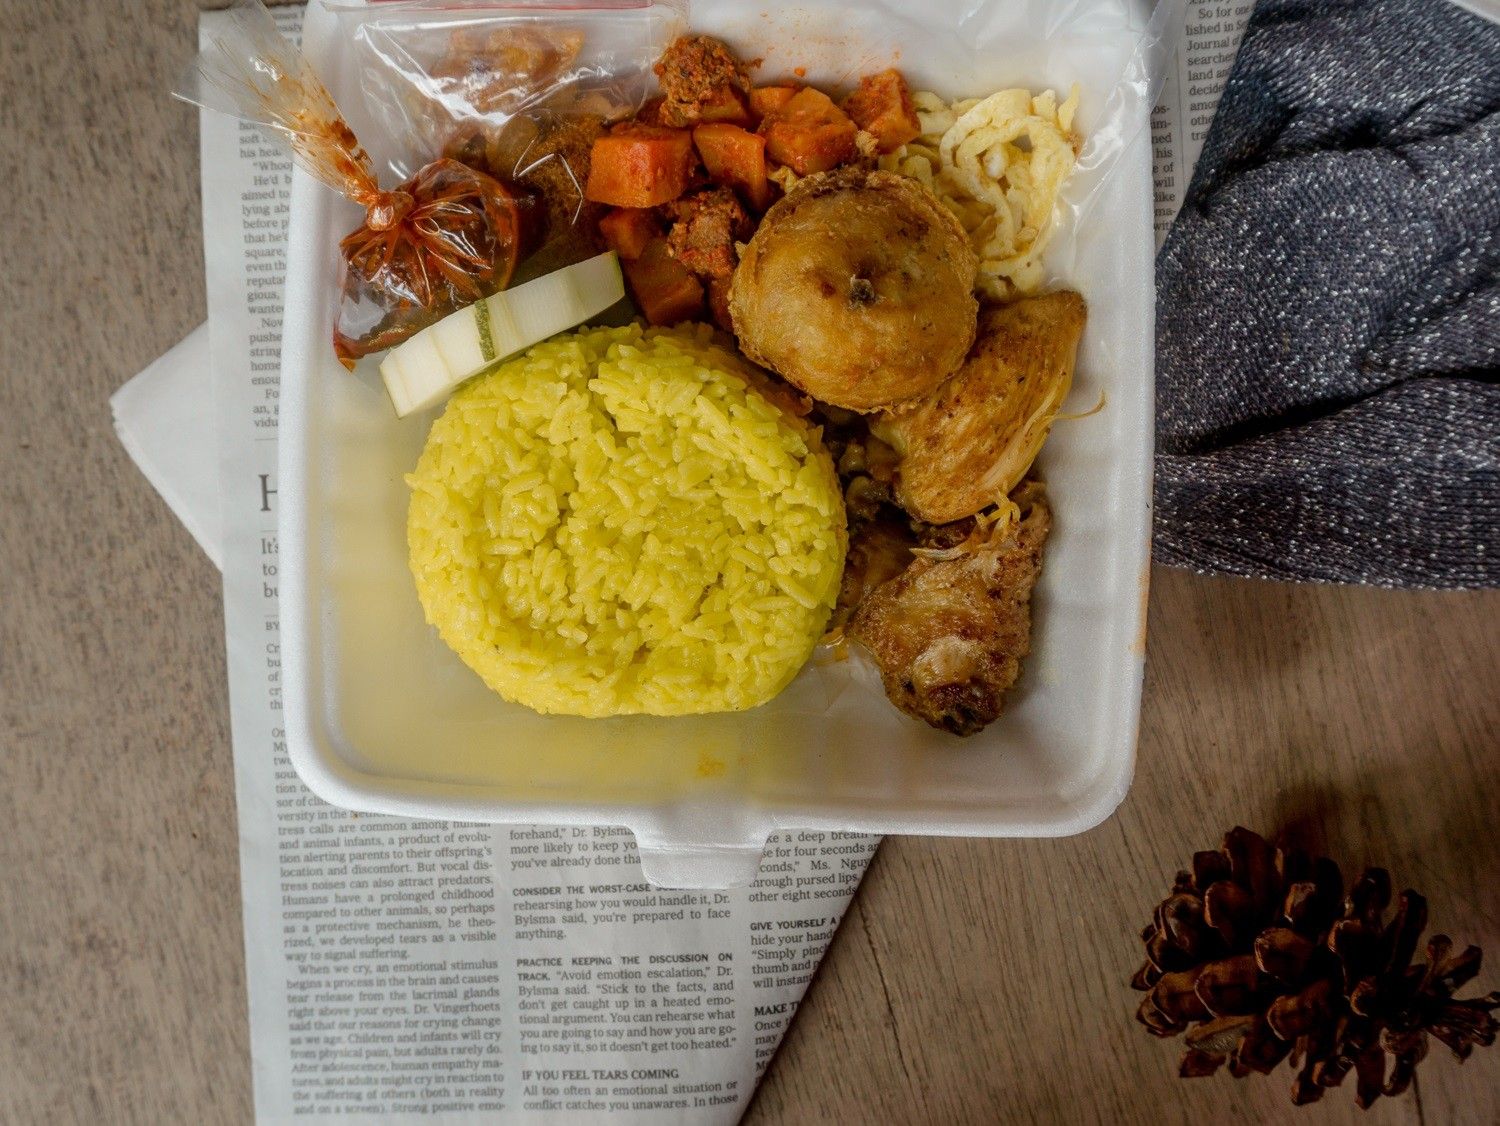 Butuh Rekomendasi Makan Siang di Surabaya? Coba Nasi Kuning Depot Langgeng Jaya